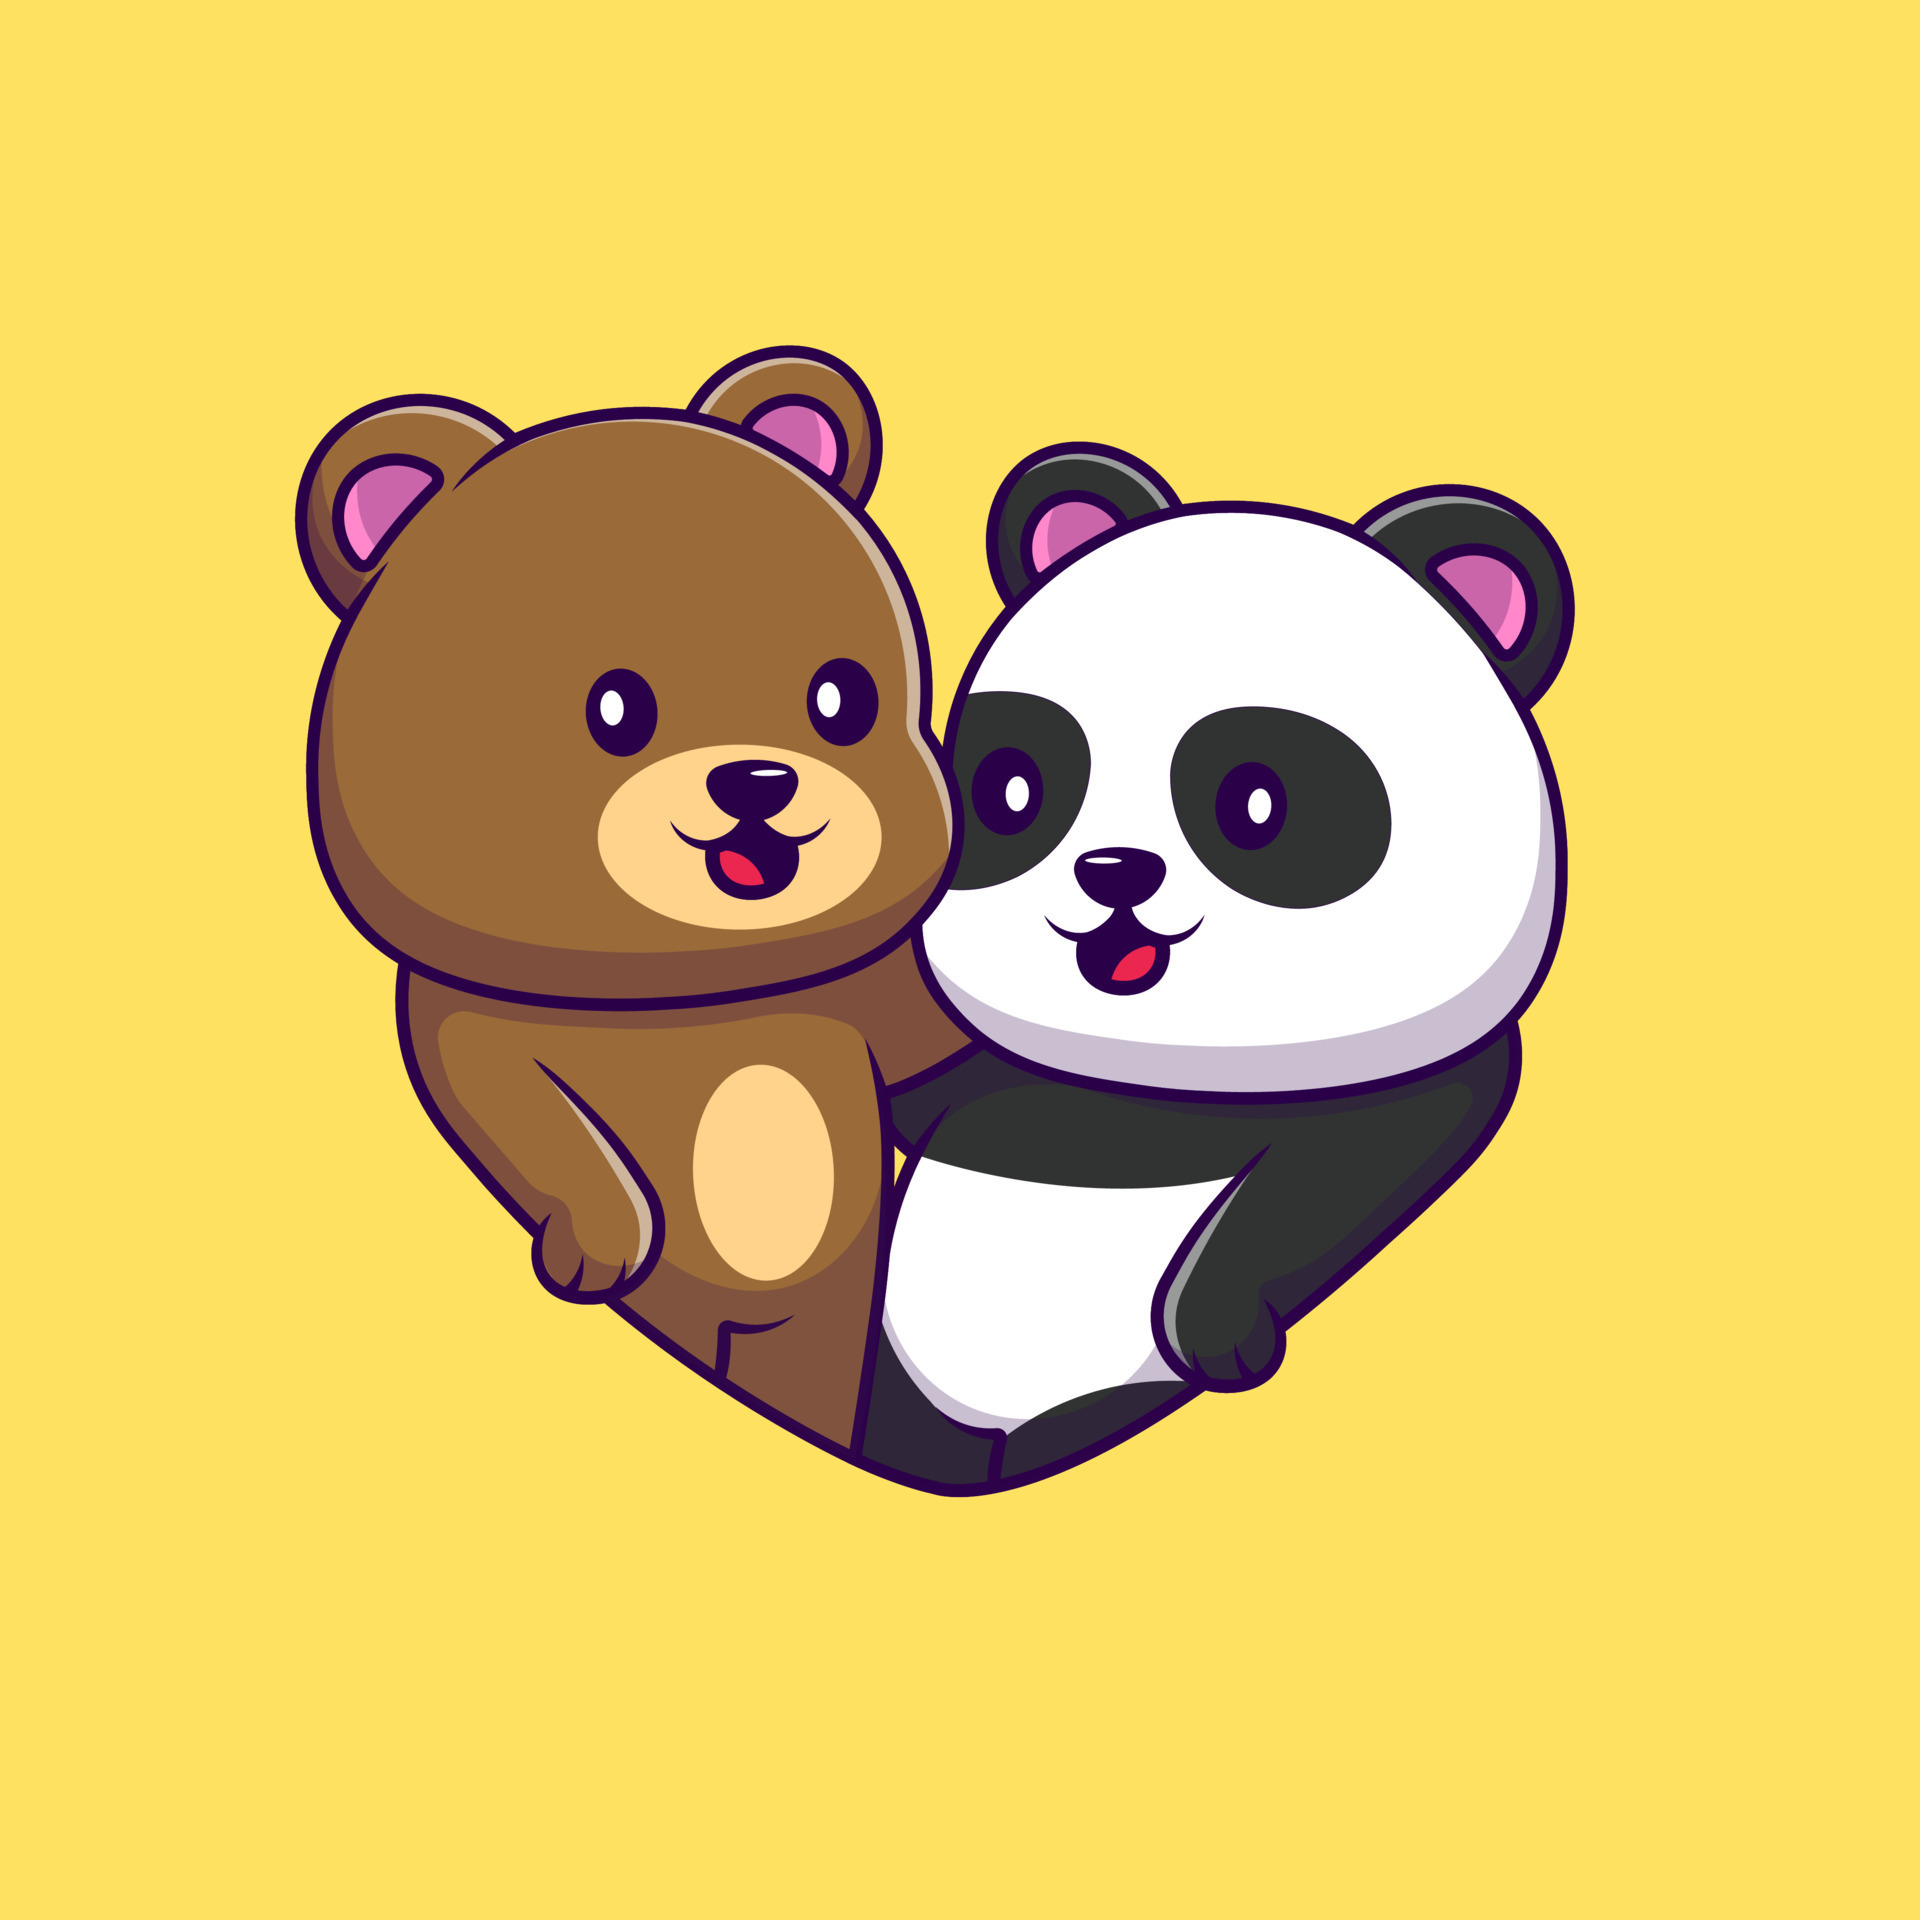 Cute Couple Panda And Cute Bear Cartoon Vector Icons Illustration. Flat  Cartoon Concept. Suitable for any creative project. 15614643 Vector Art at  Vecteezy